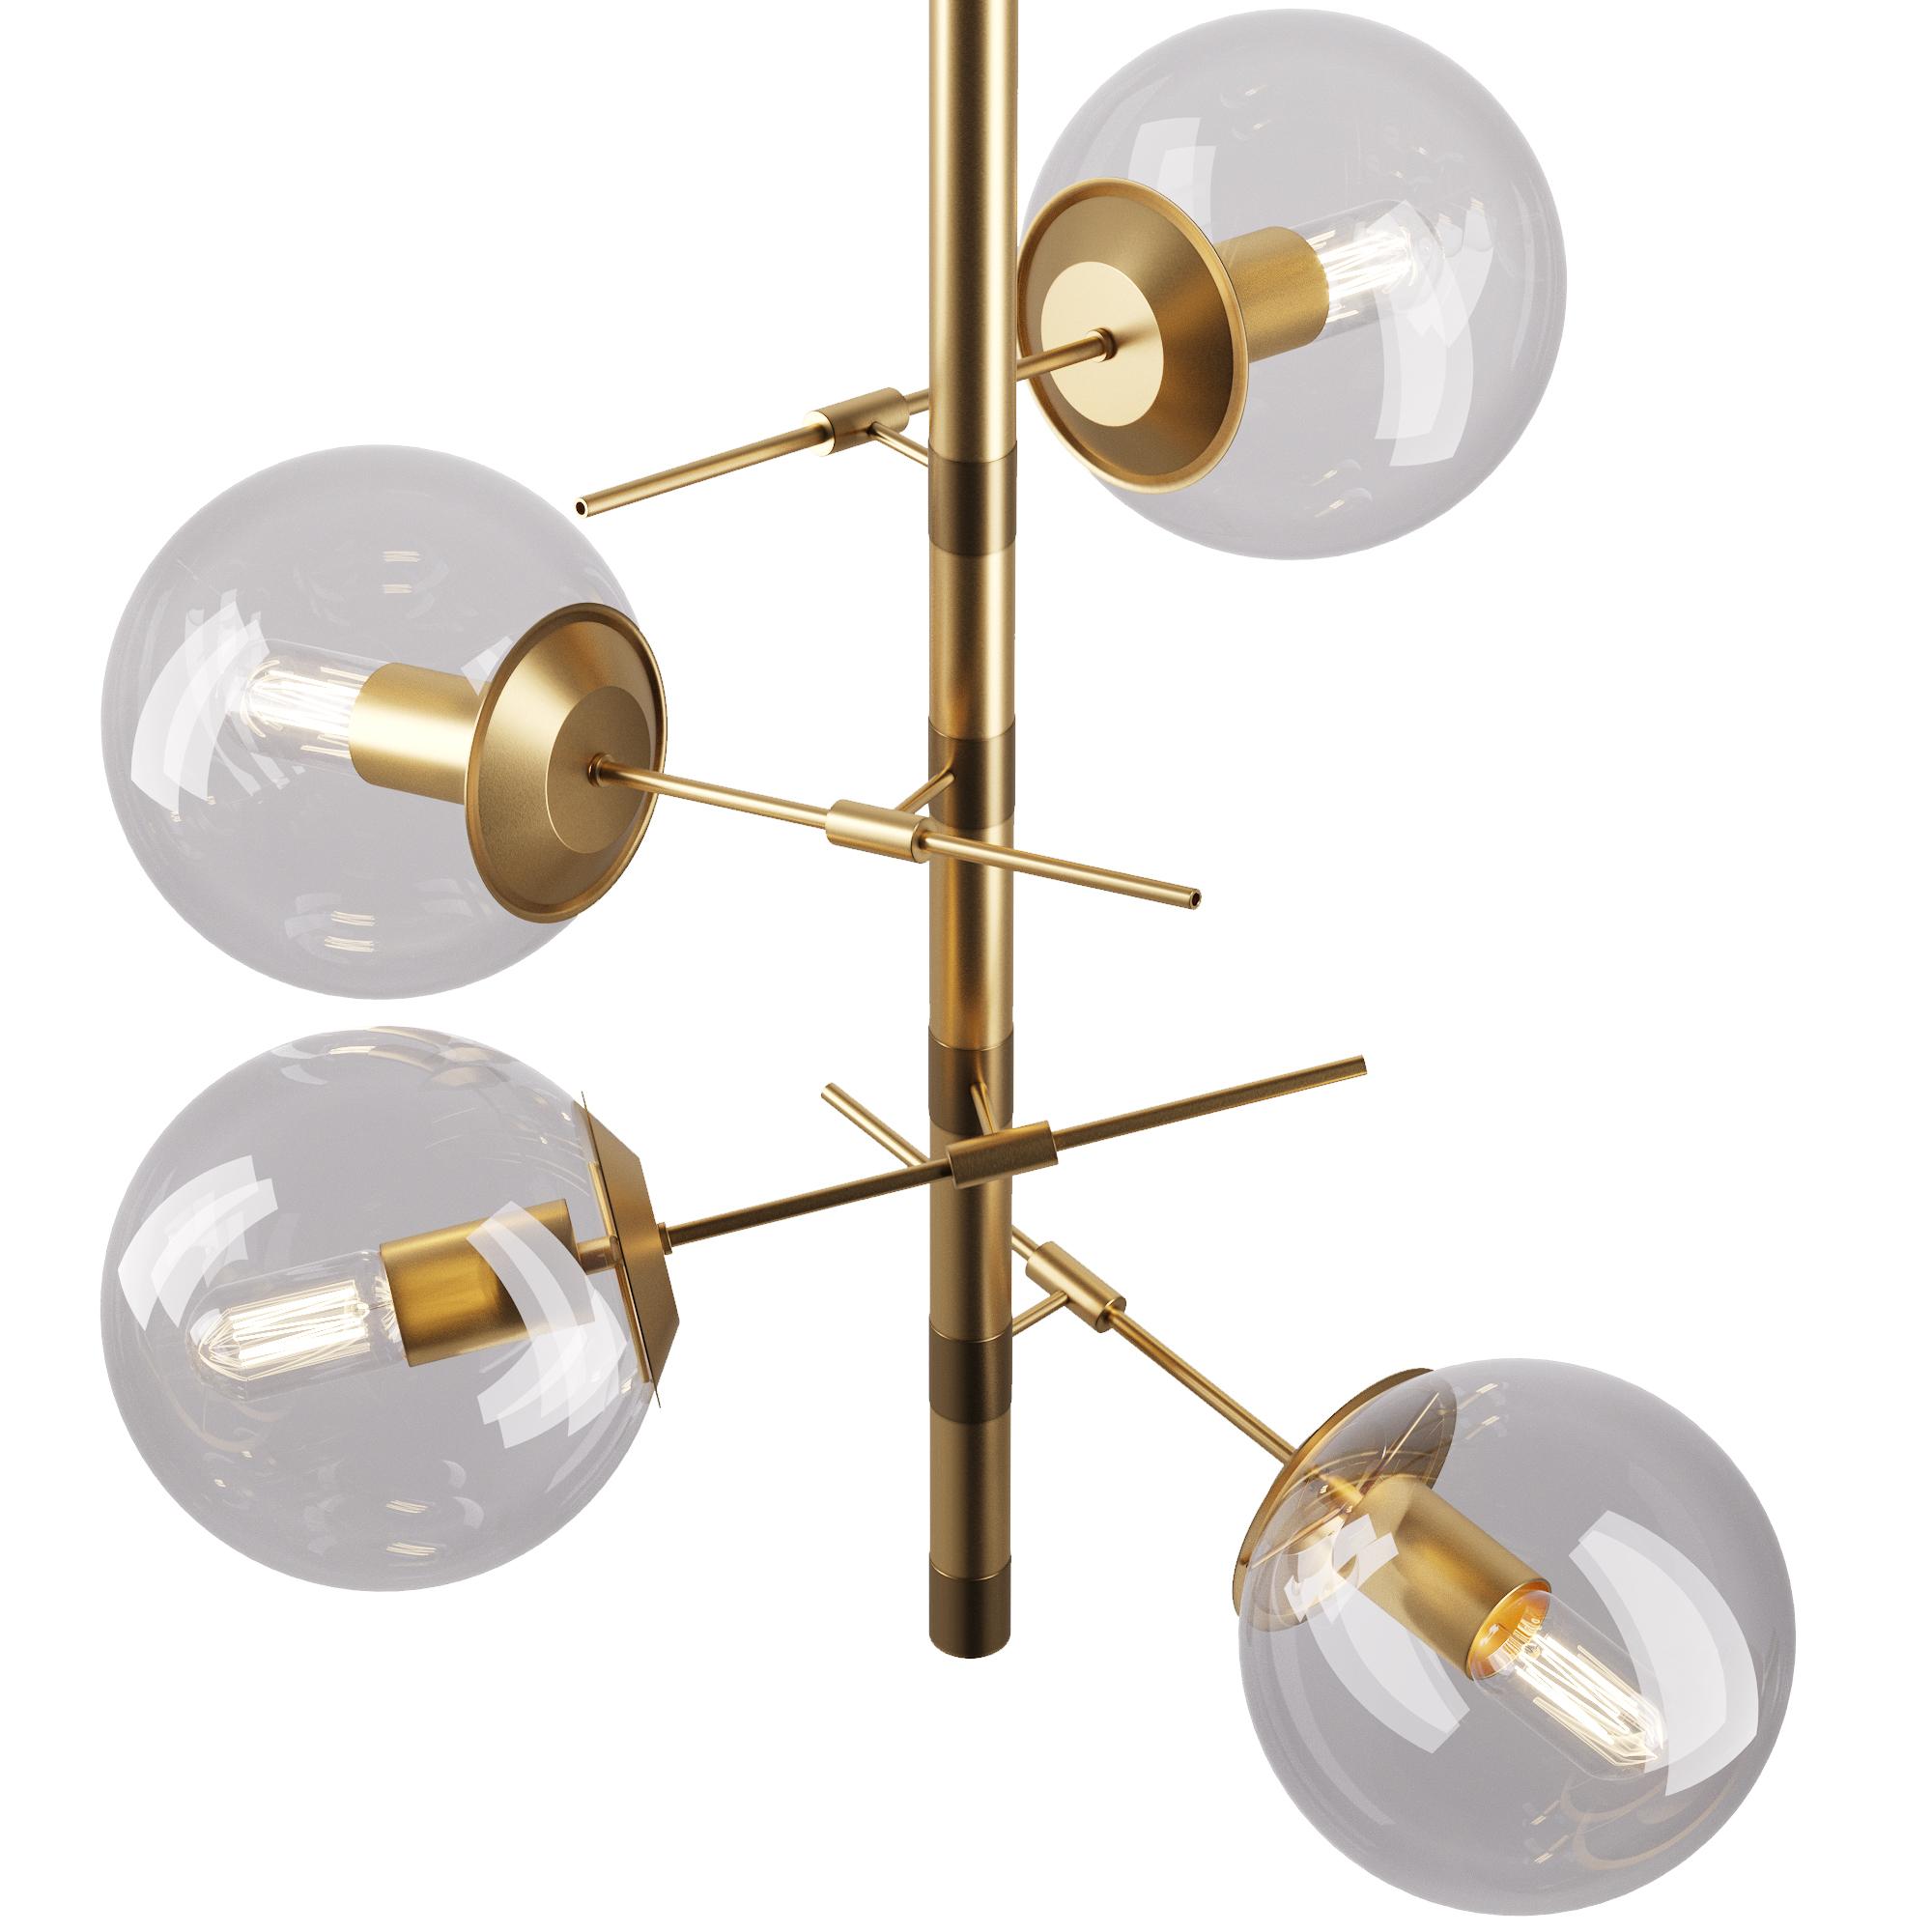 LV lamp, SKU. 5552 by Pikartlights 3d model